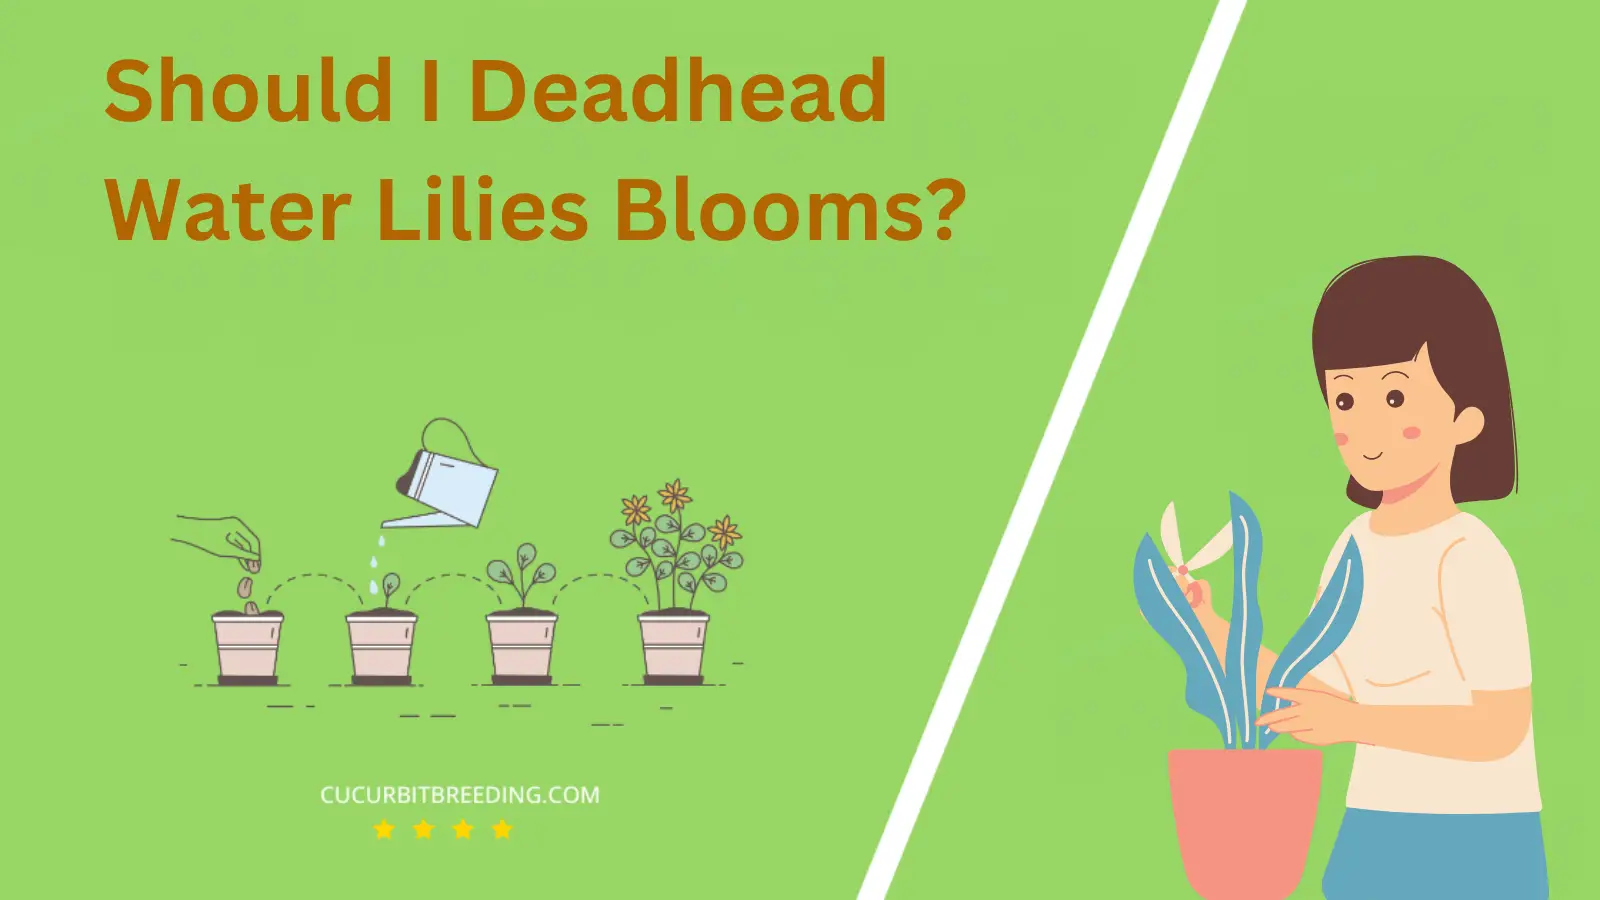 Should I Deadhead Water Lilies Blooms?